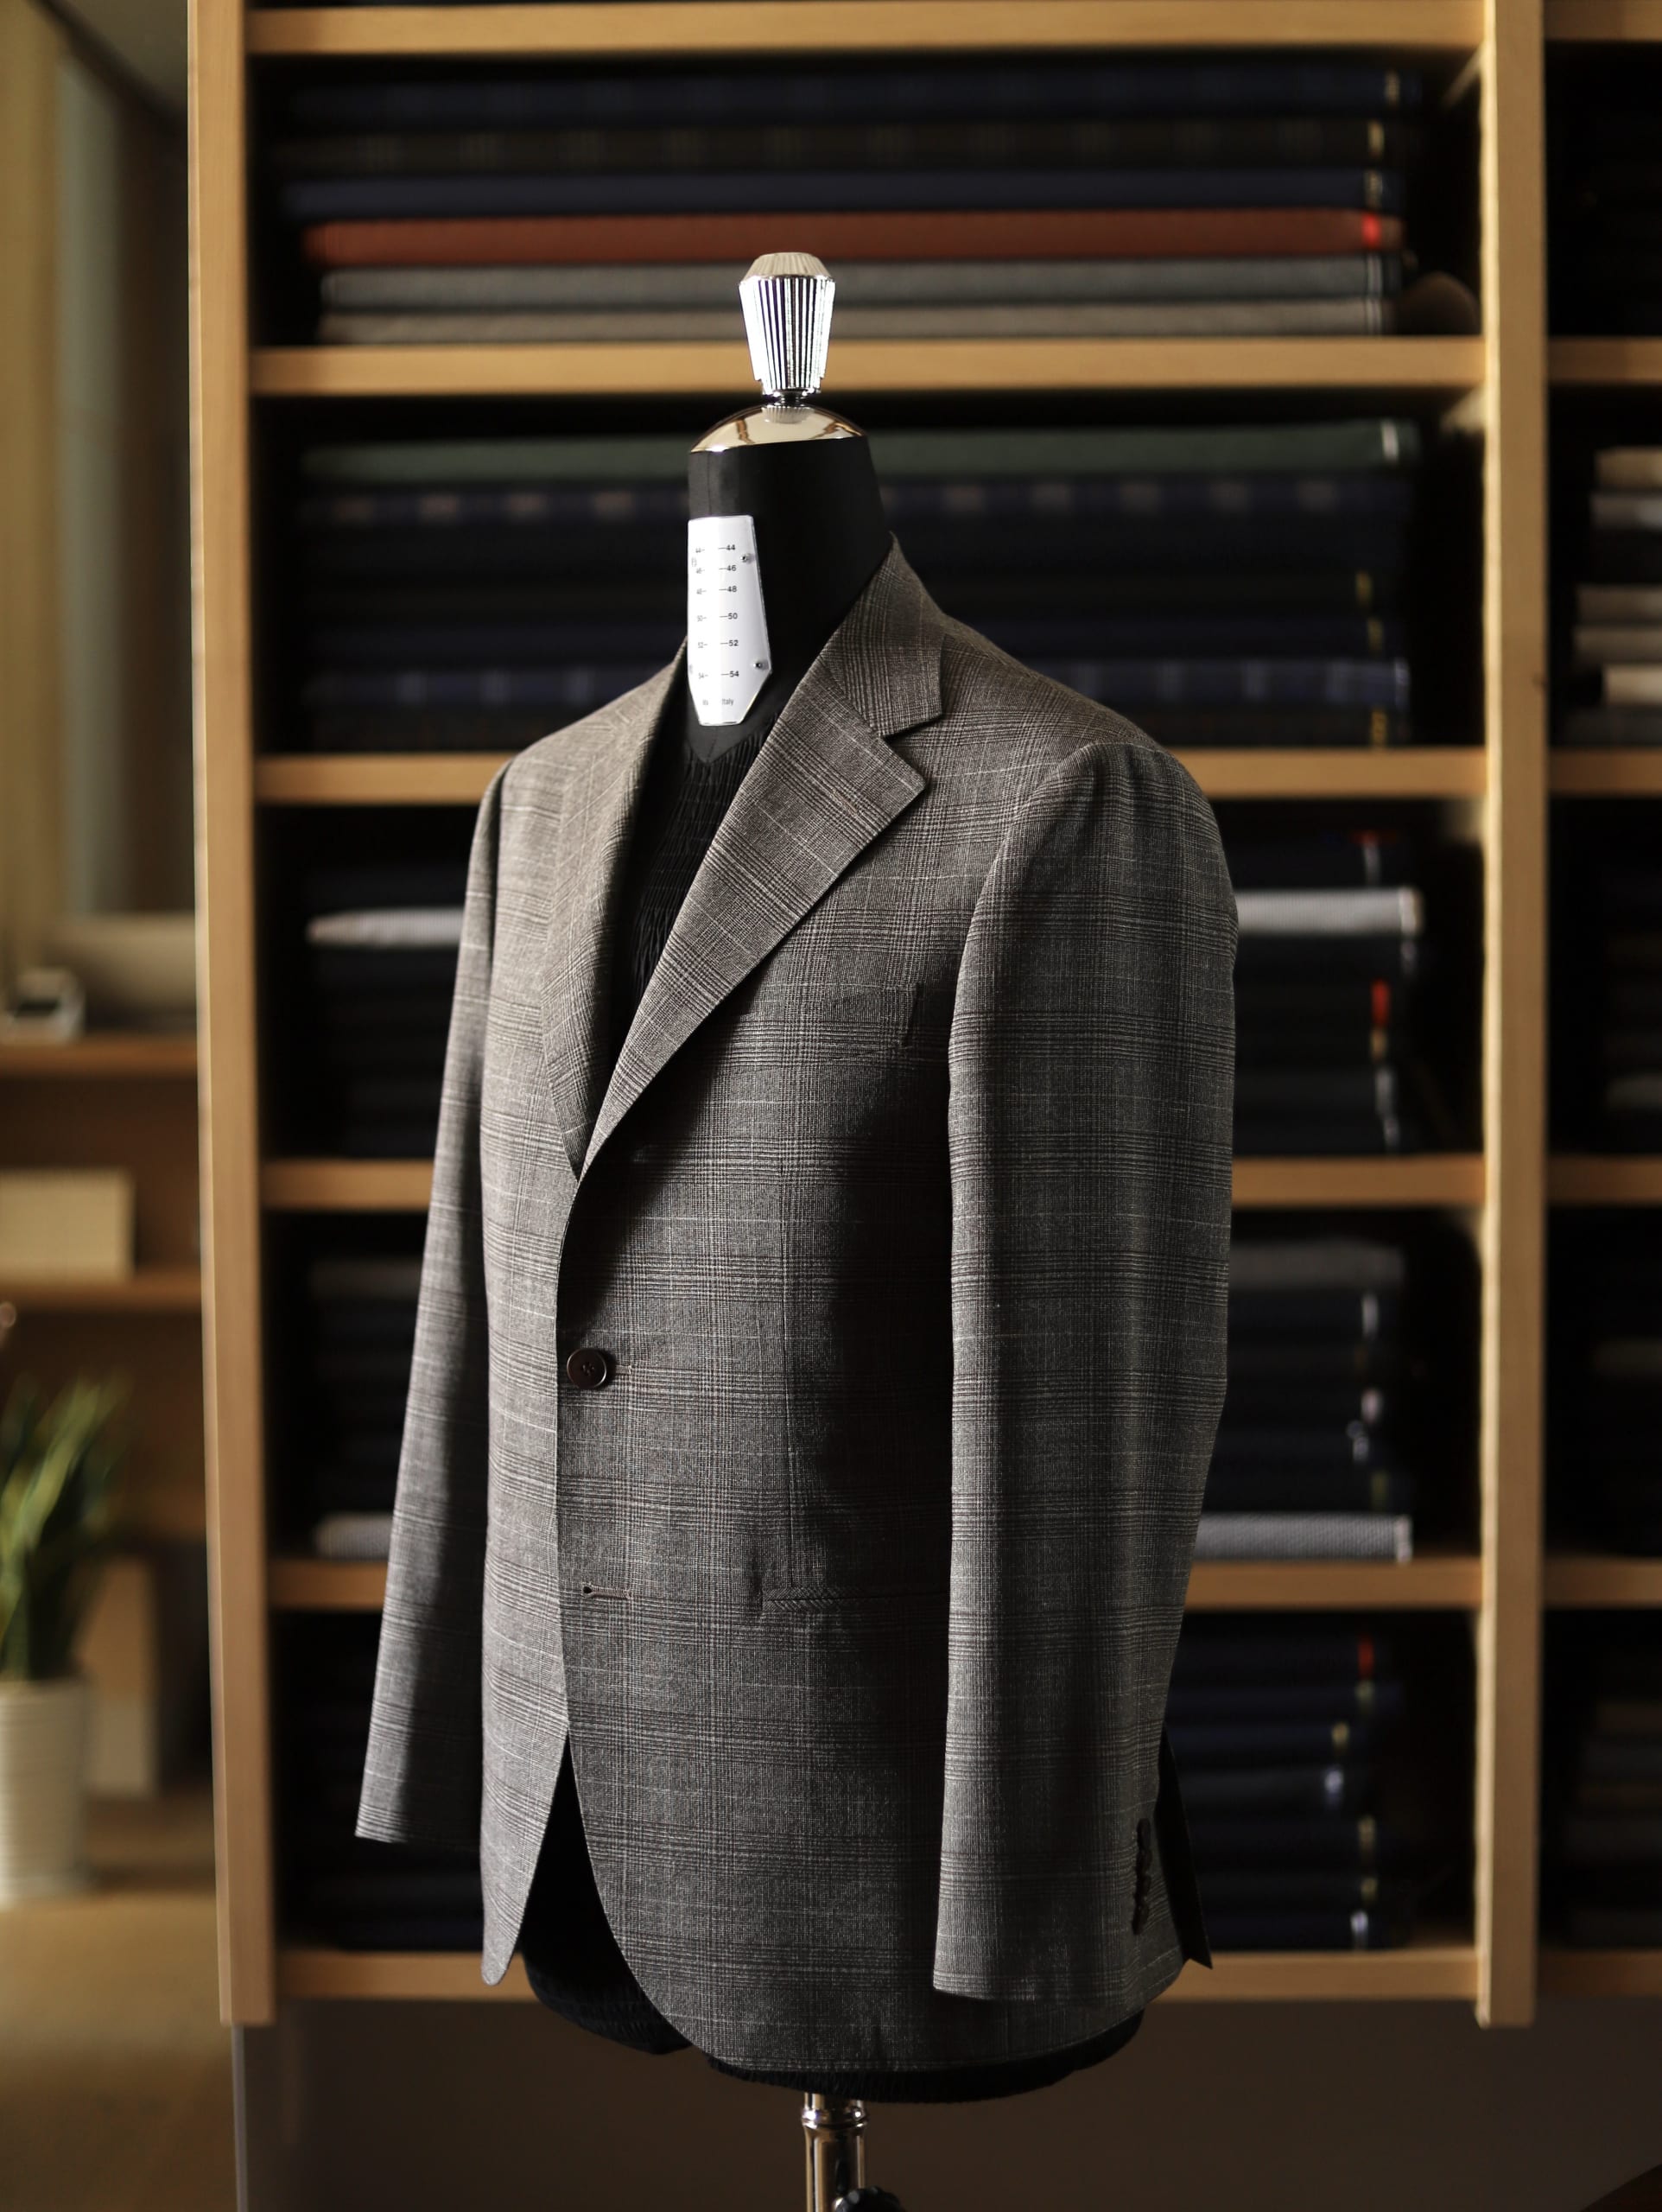 Bespoke Suit（ビスポークスーツ） – 神戸・元町でビスポークの